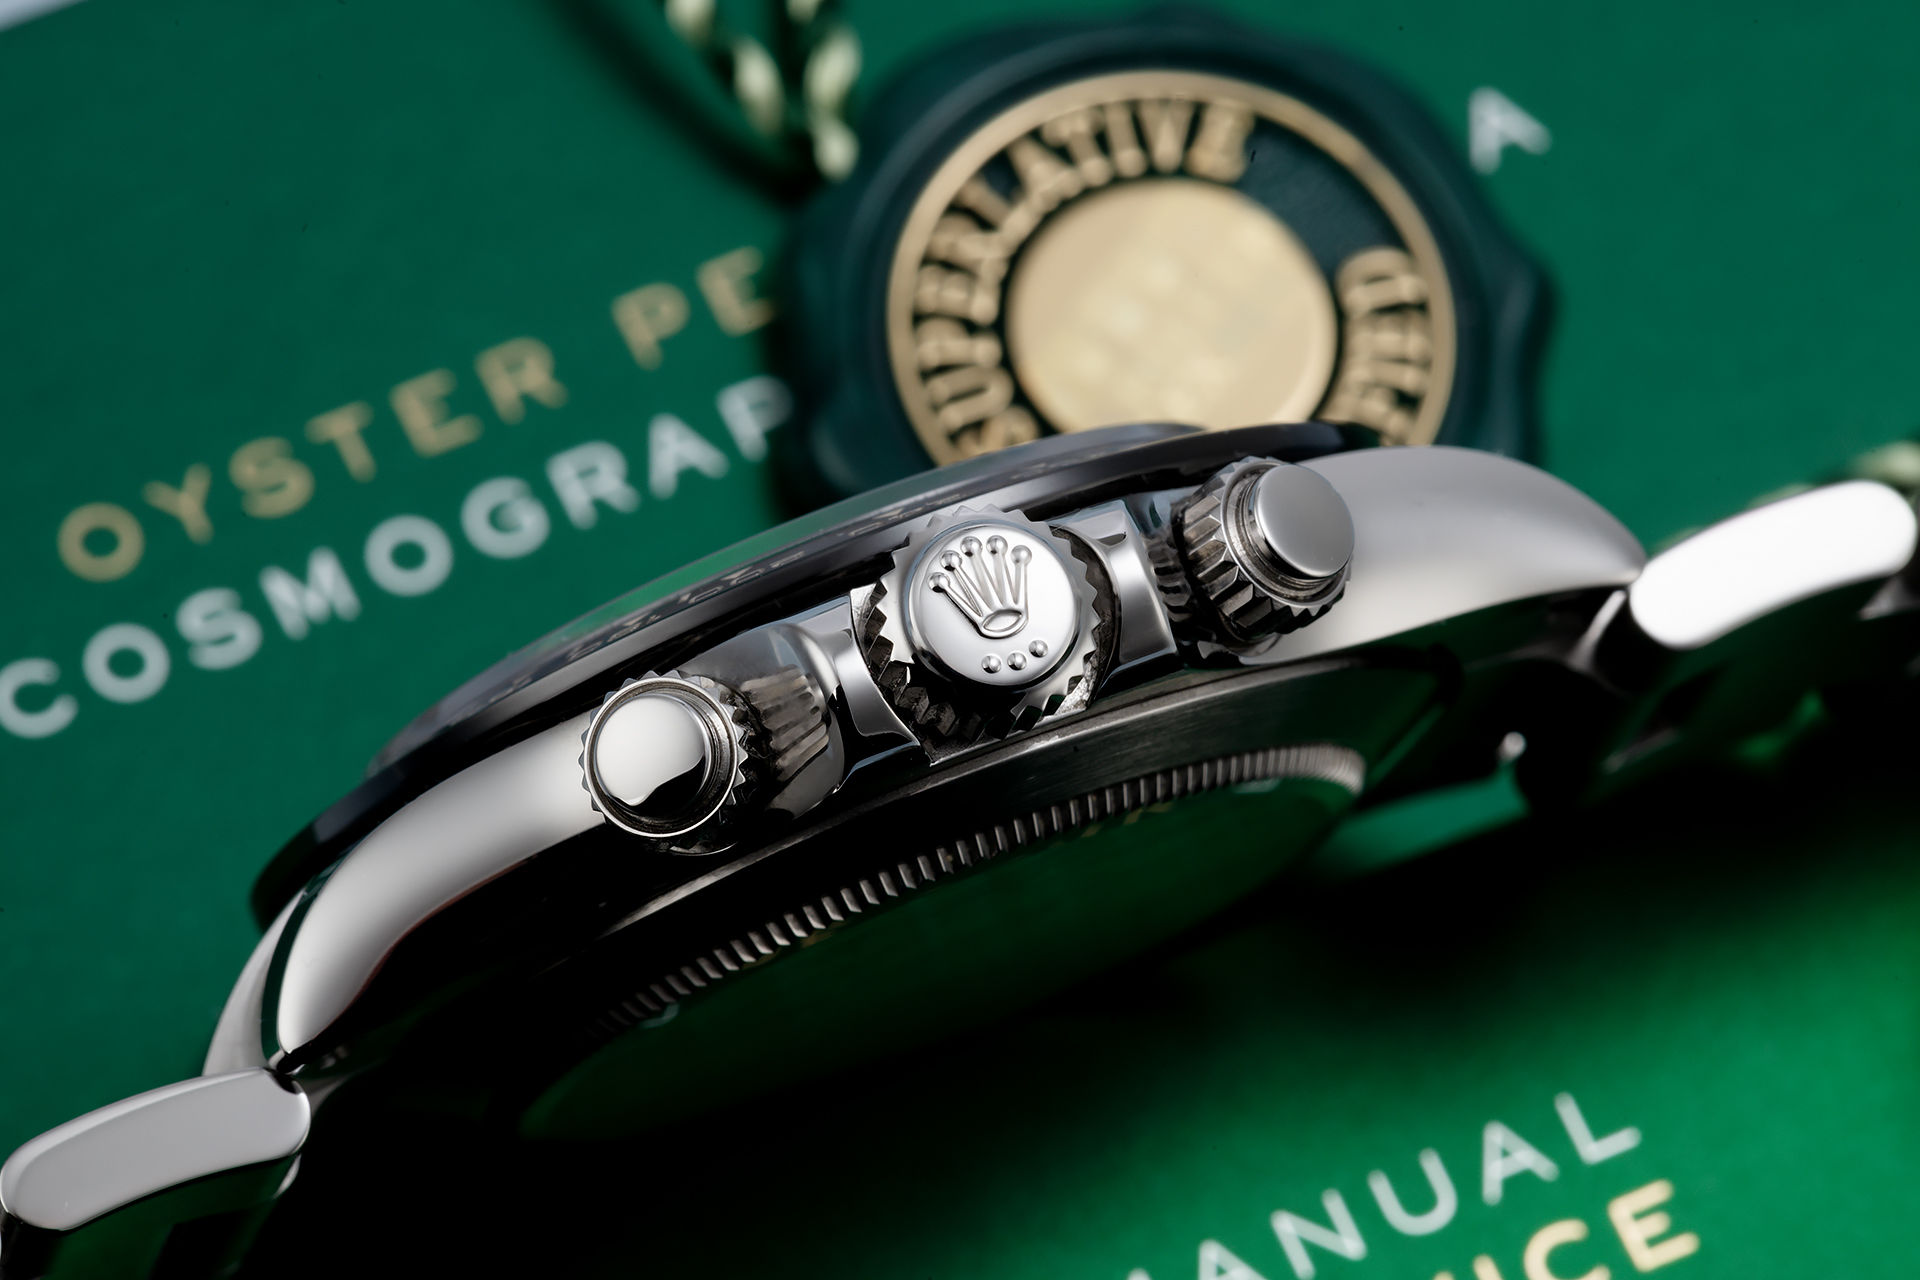 ref 116500LN | Cerachrom Bezel '5 Year Warranty' | Rolex Cosmograph Daytona